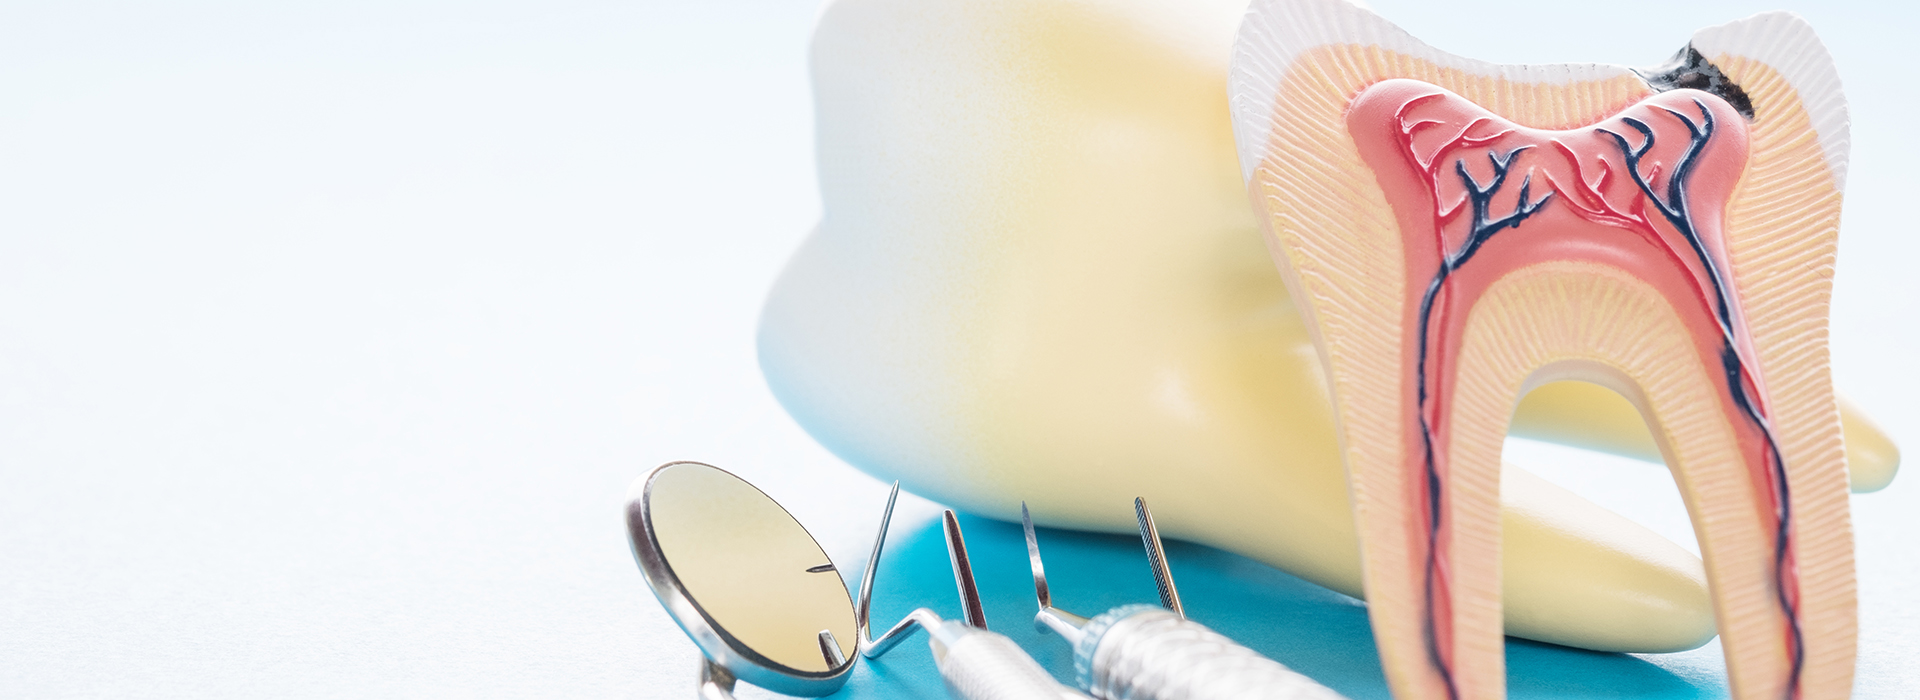 Norwalk Dental Center | Digital Radiography, Laser Dentistry and Dental Cleanings